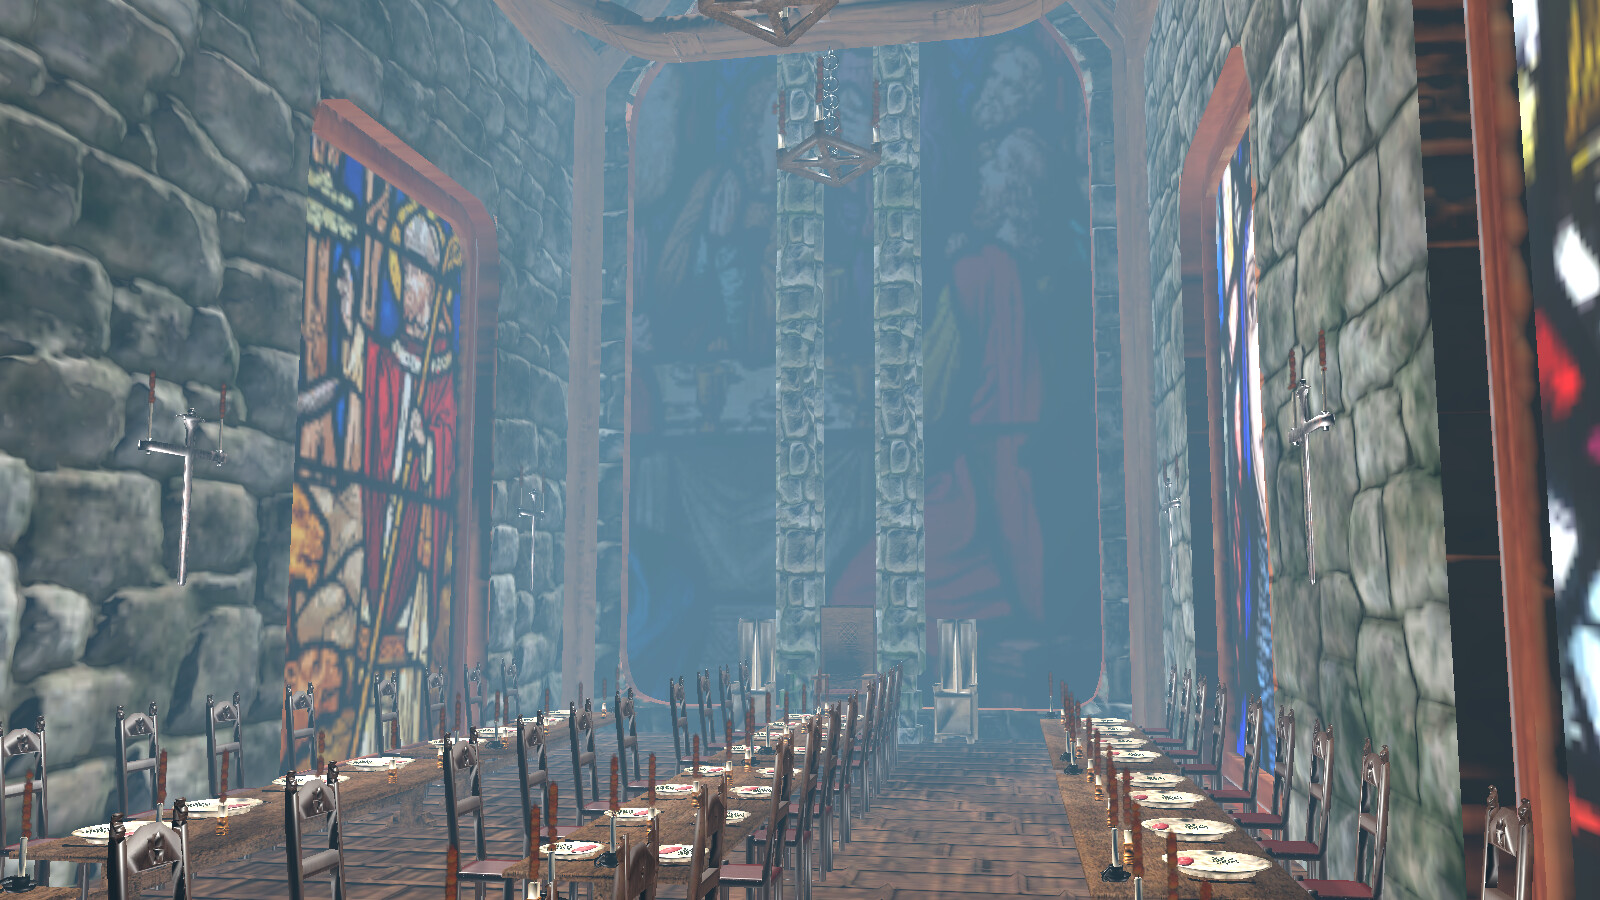 Medieval dining hall